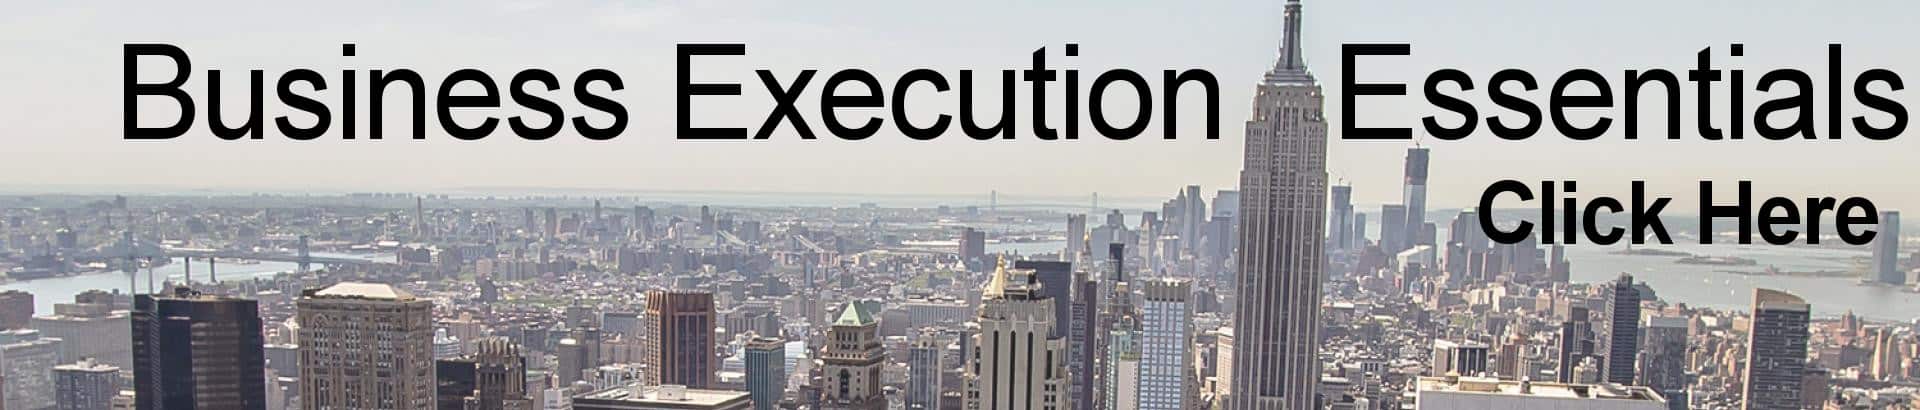 Business-Execution-Essentials-Banner